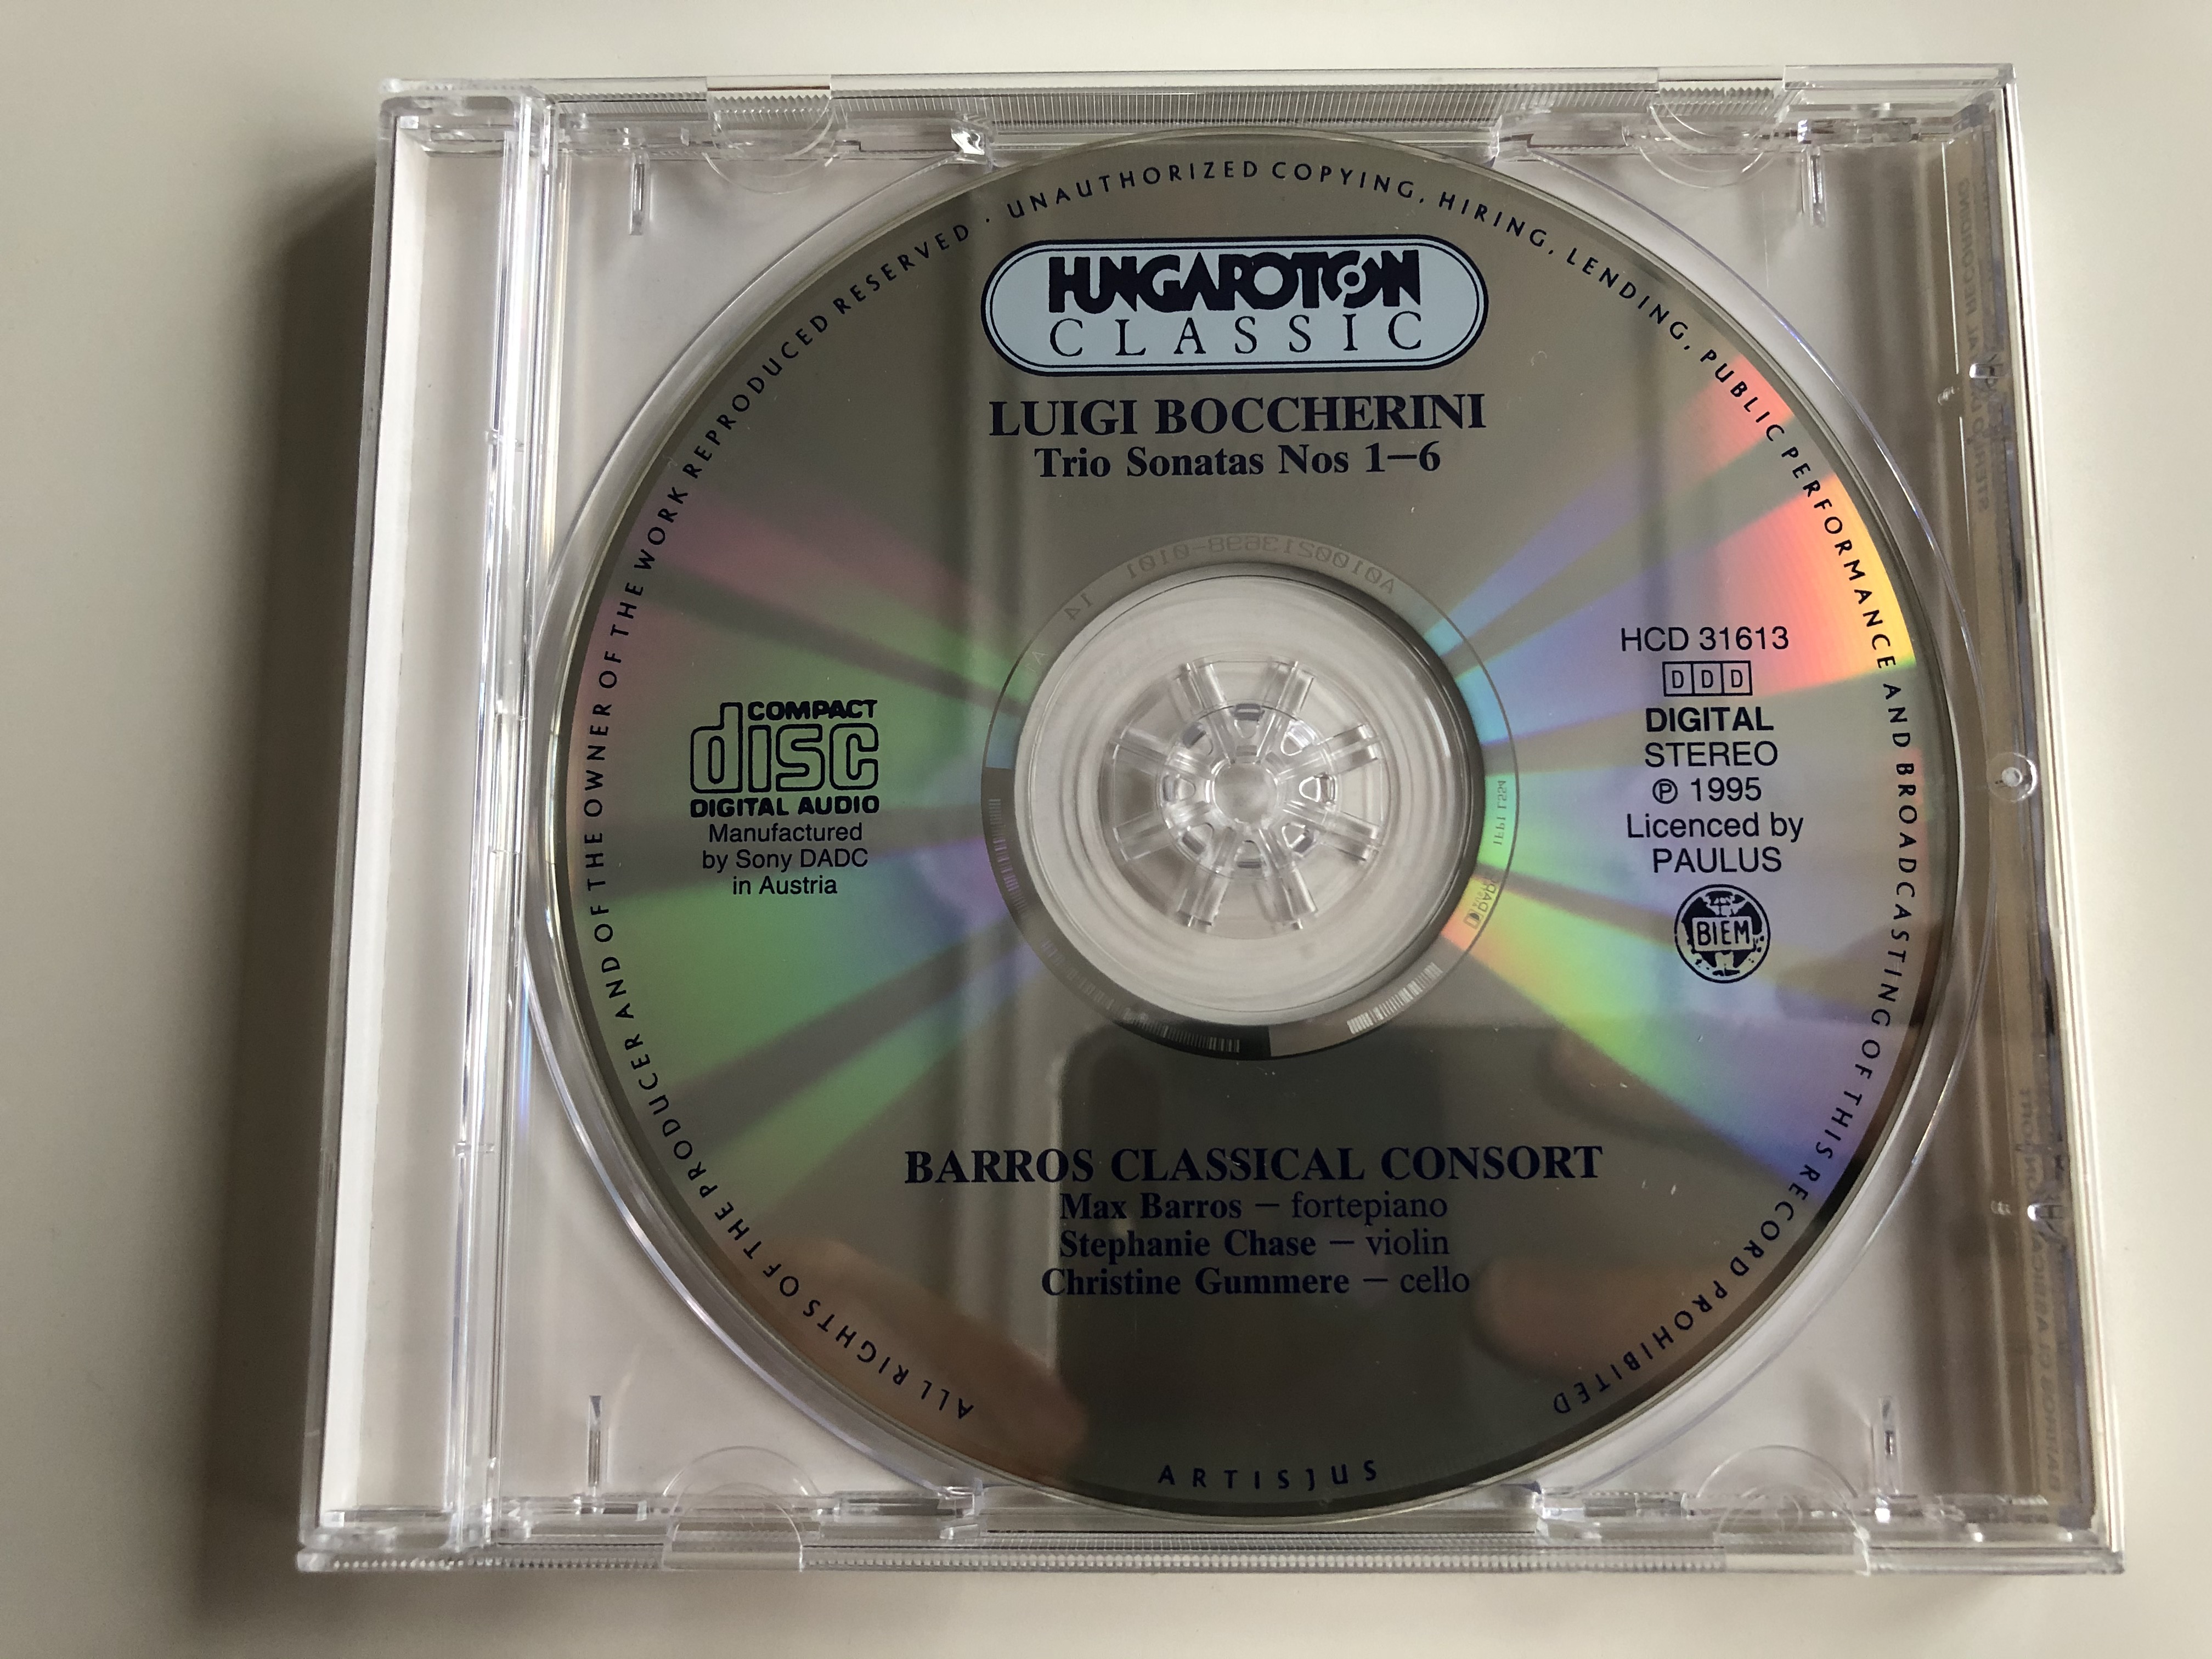 luigi-boccherini-trio-sonatas-nos-1-6-hungaroton-classic-audio-cd-1995-stereo-hcd-31613-1-.jpg